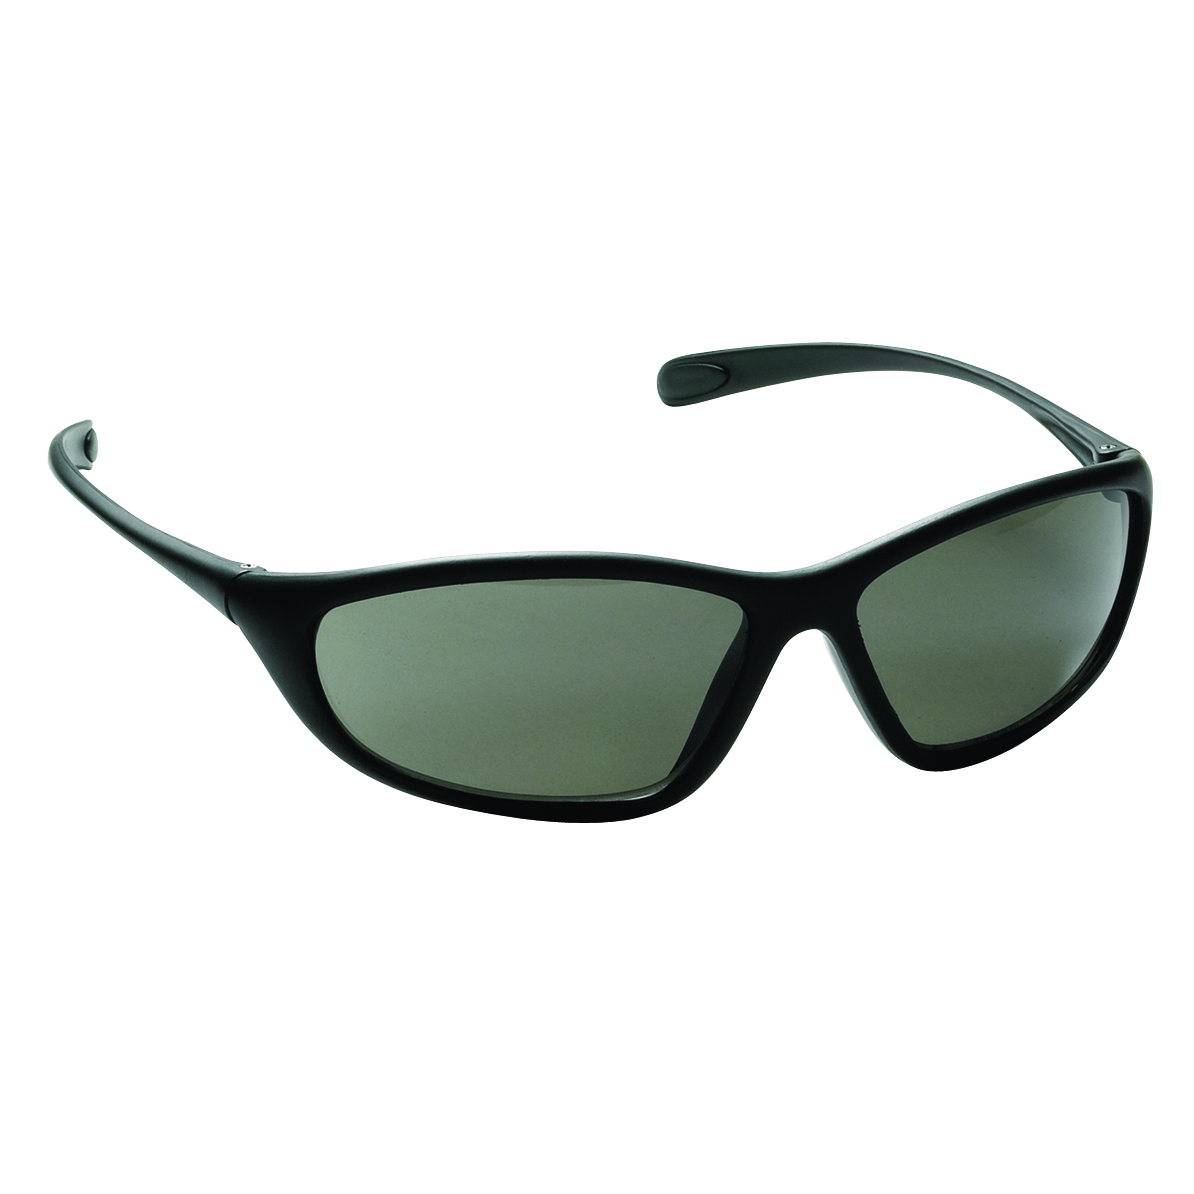 Spyder Safety Glasses, Black Frame, Gray Lens